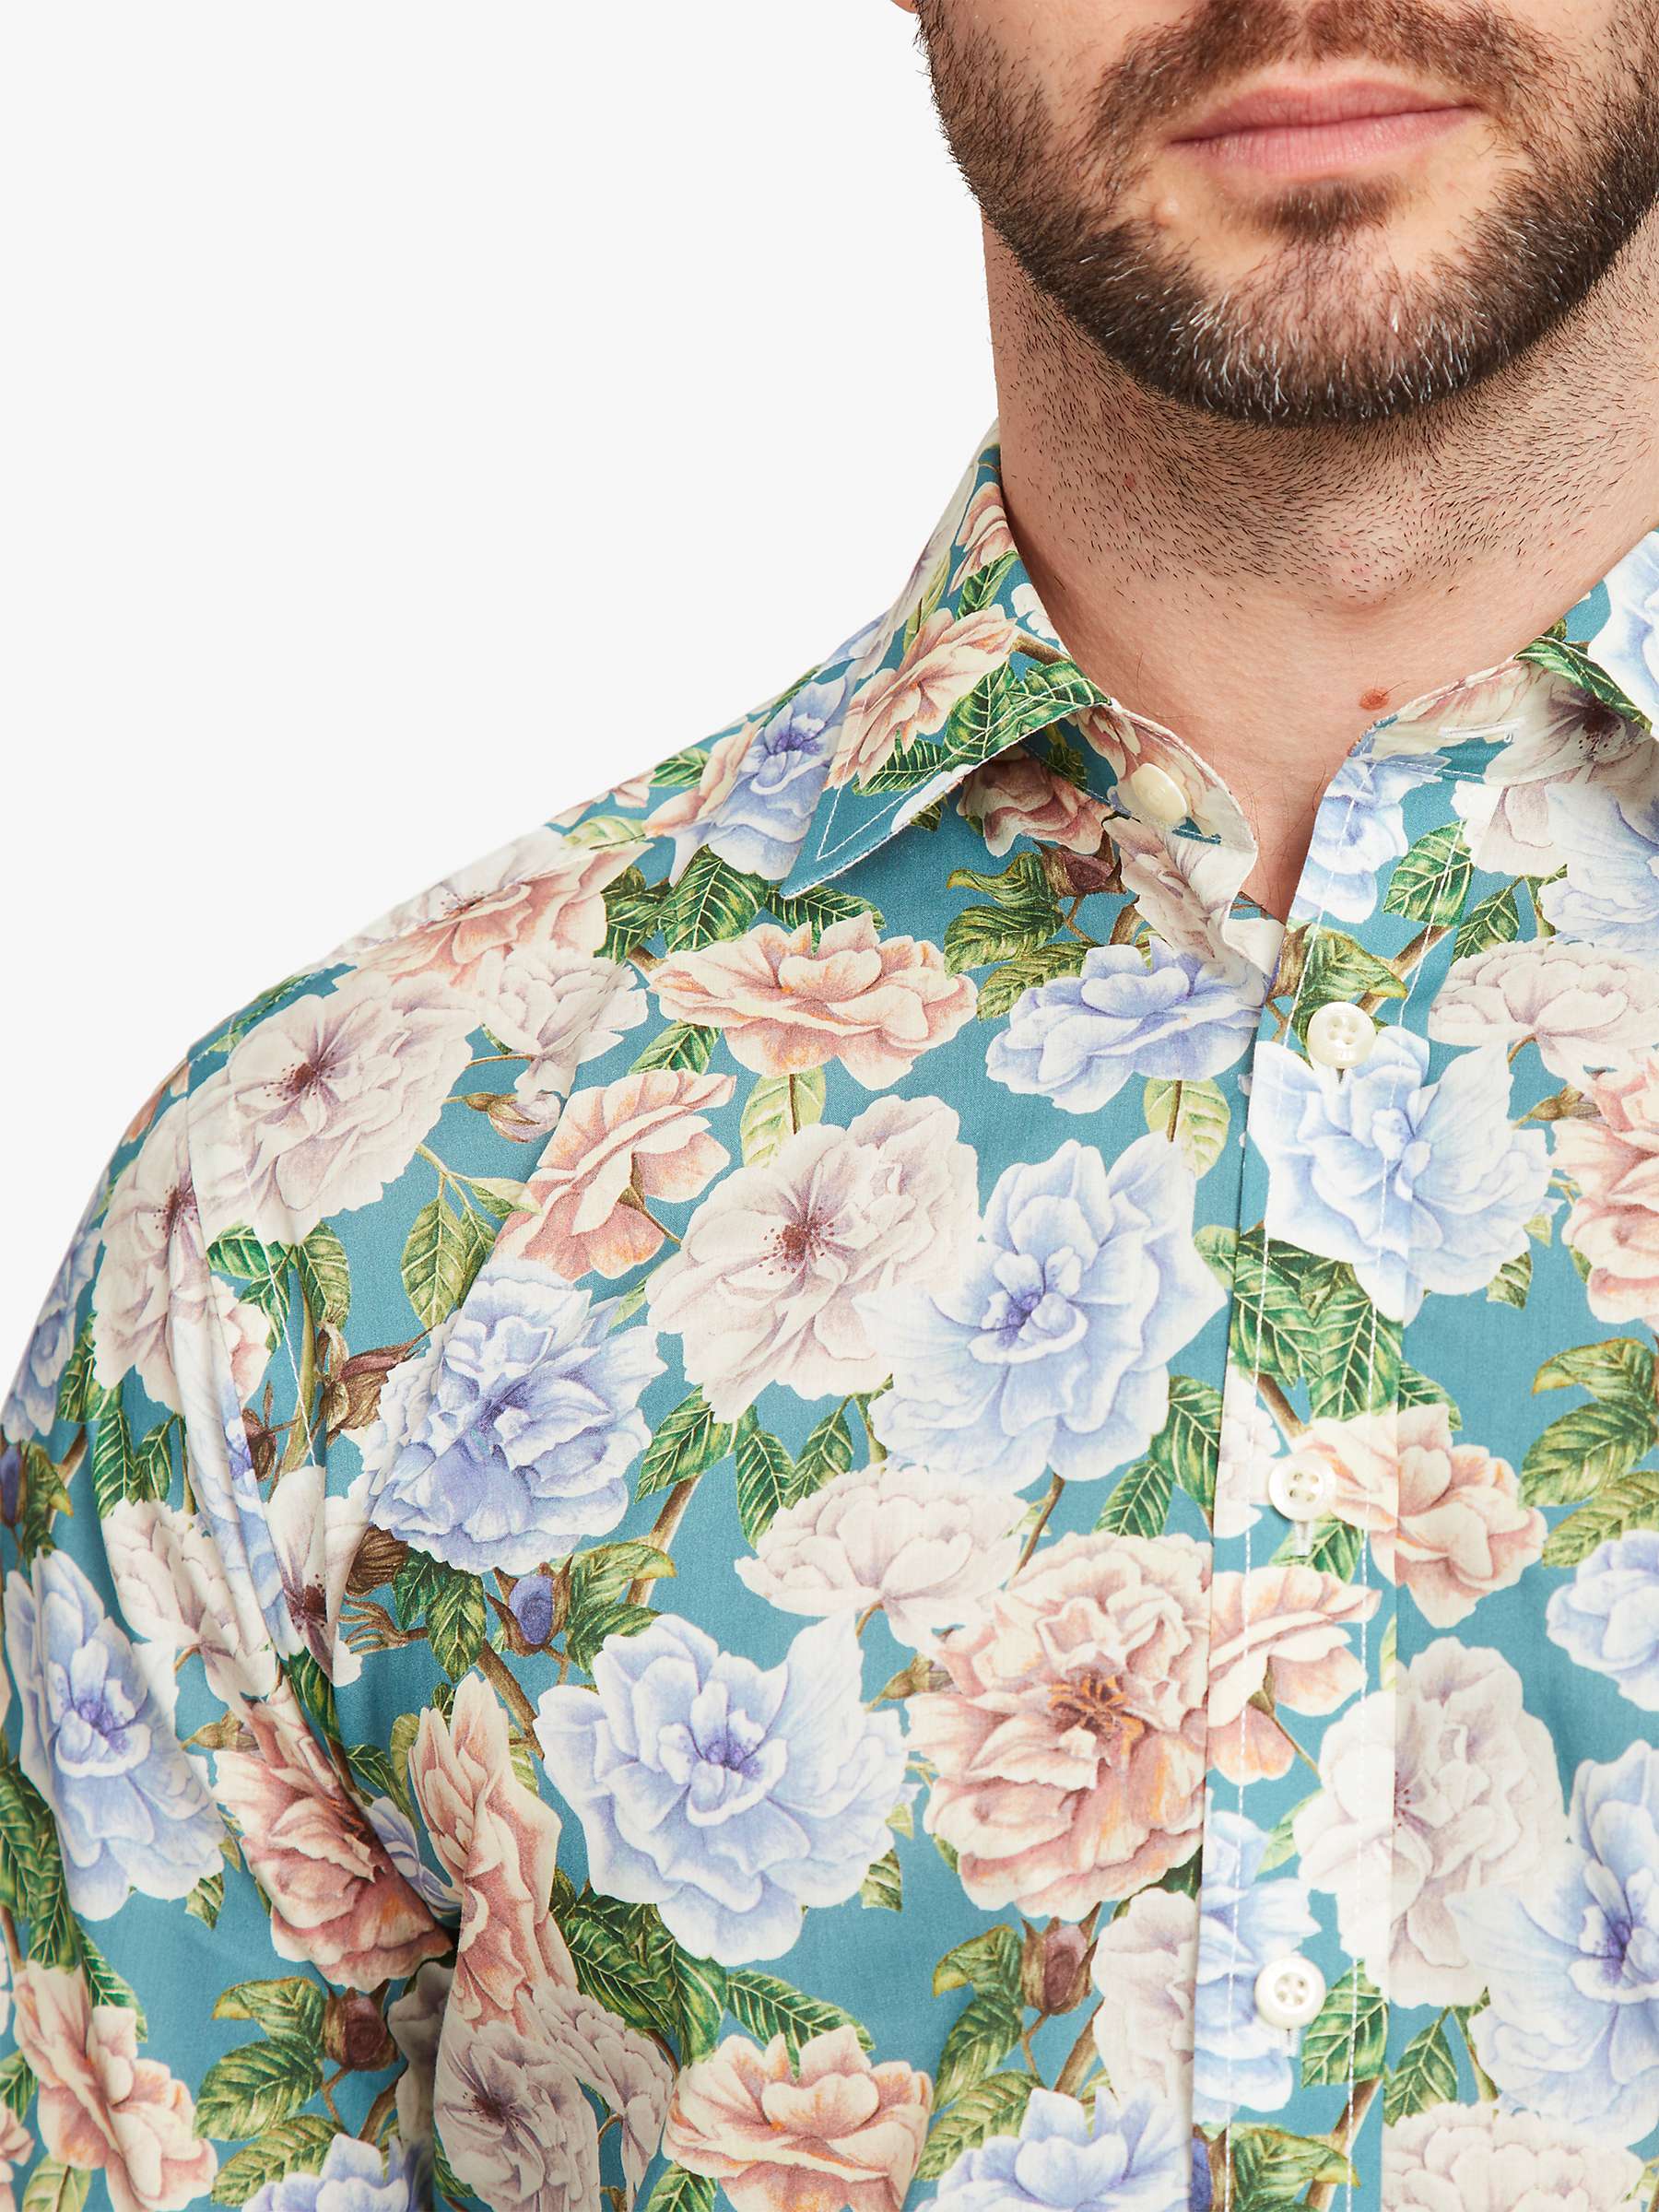 Buy Simon Carter Liberty Fabric English Rose Regular Fit Shirt, Teal/Multi Online at johnlewis.com